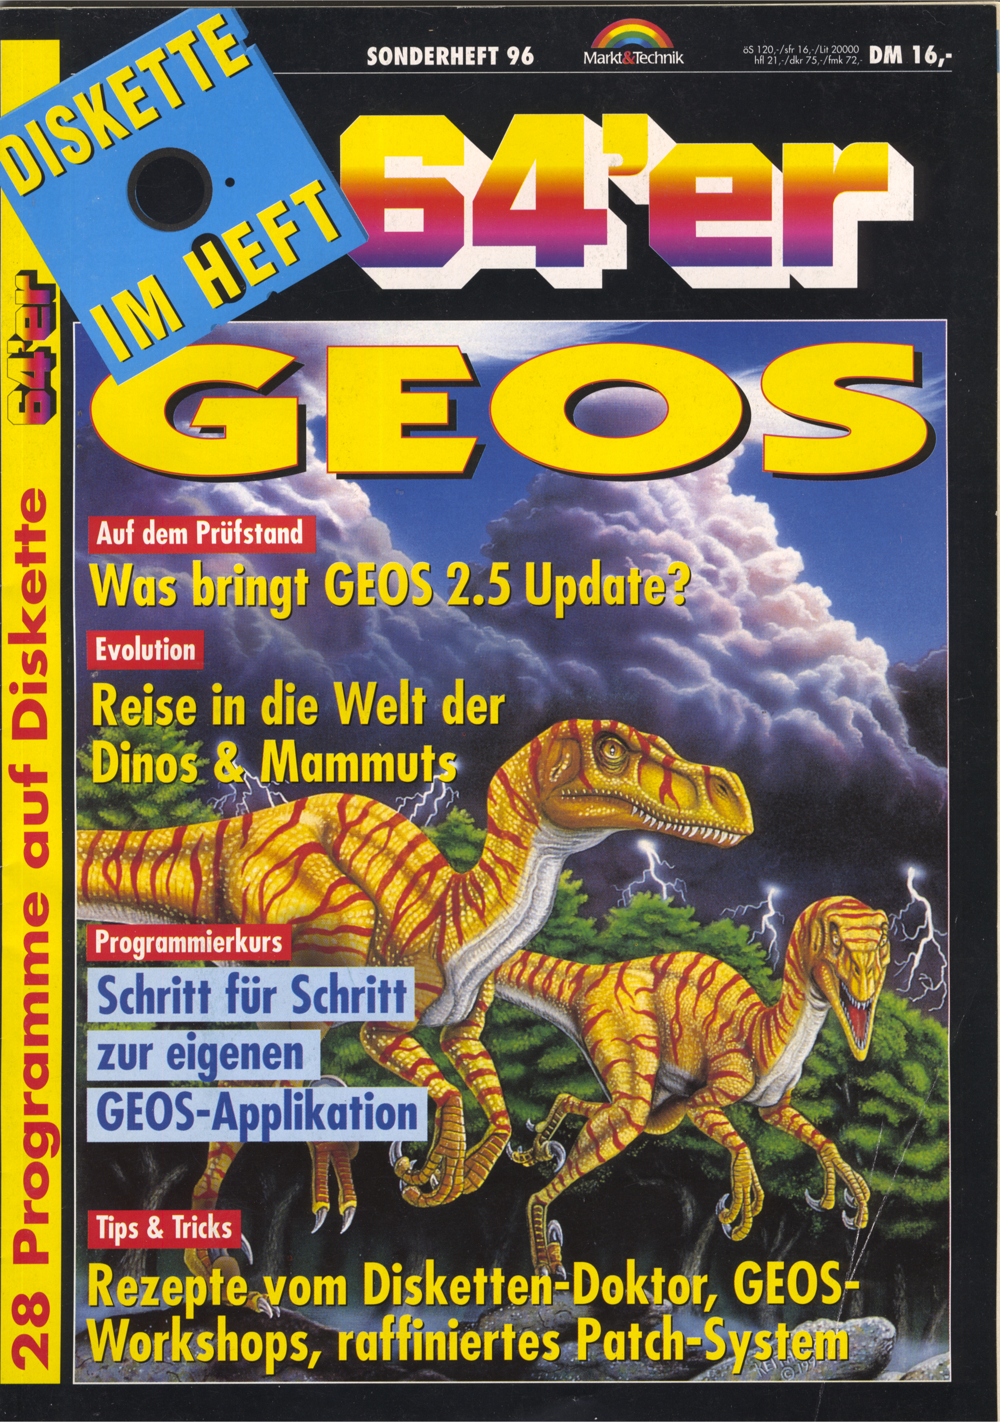 Markt u Technik C64 Sonderheft 96 GEOS